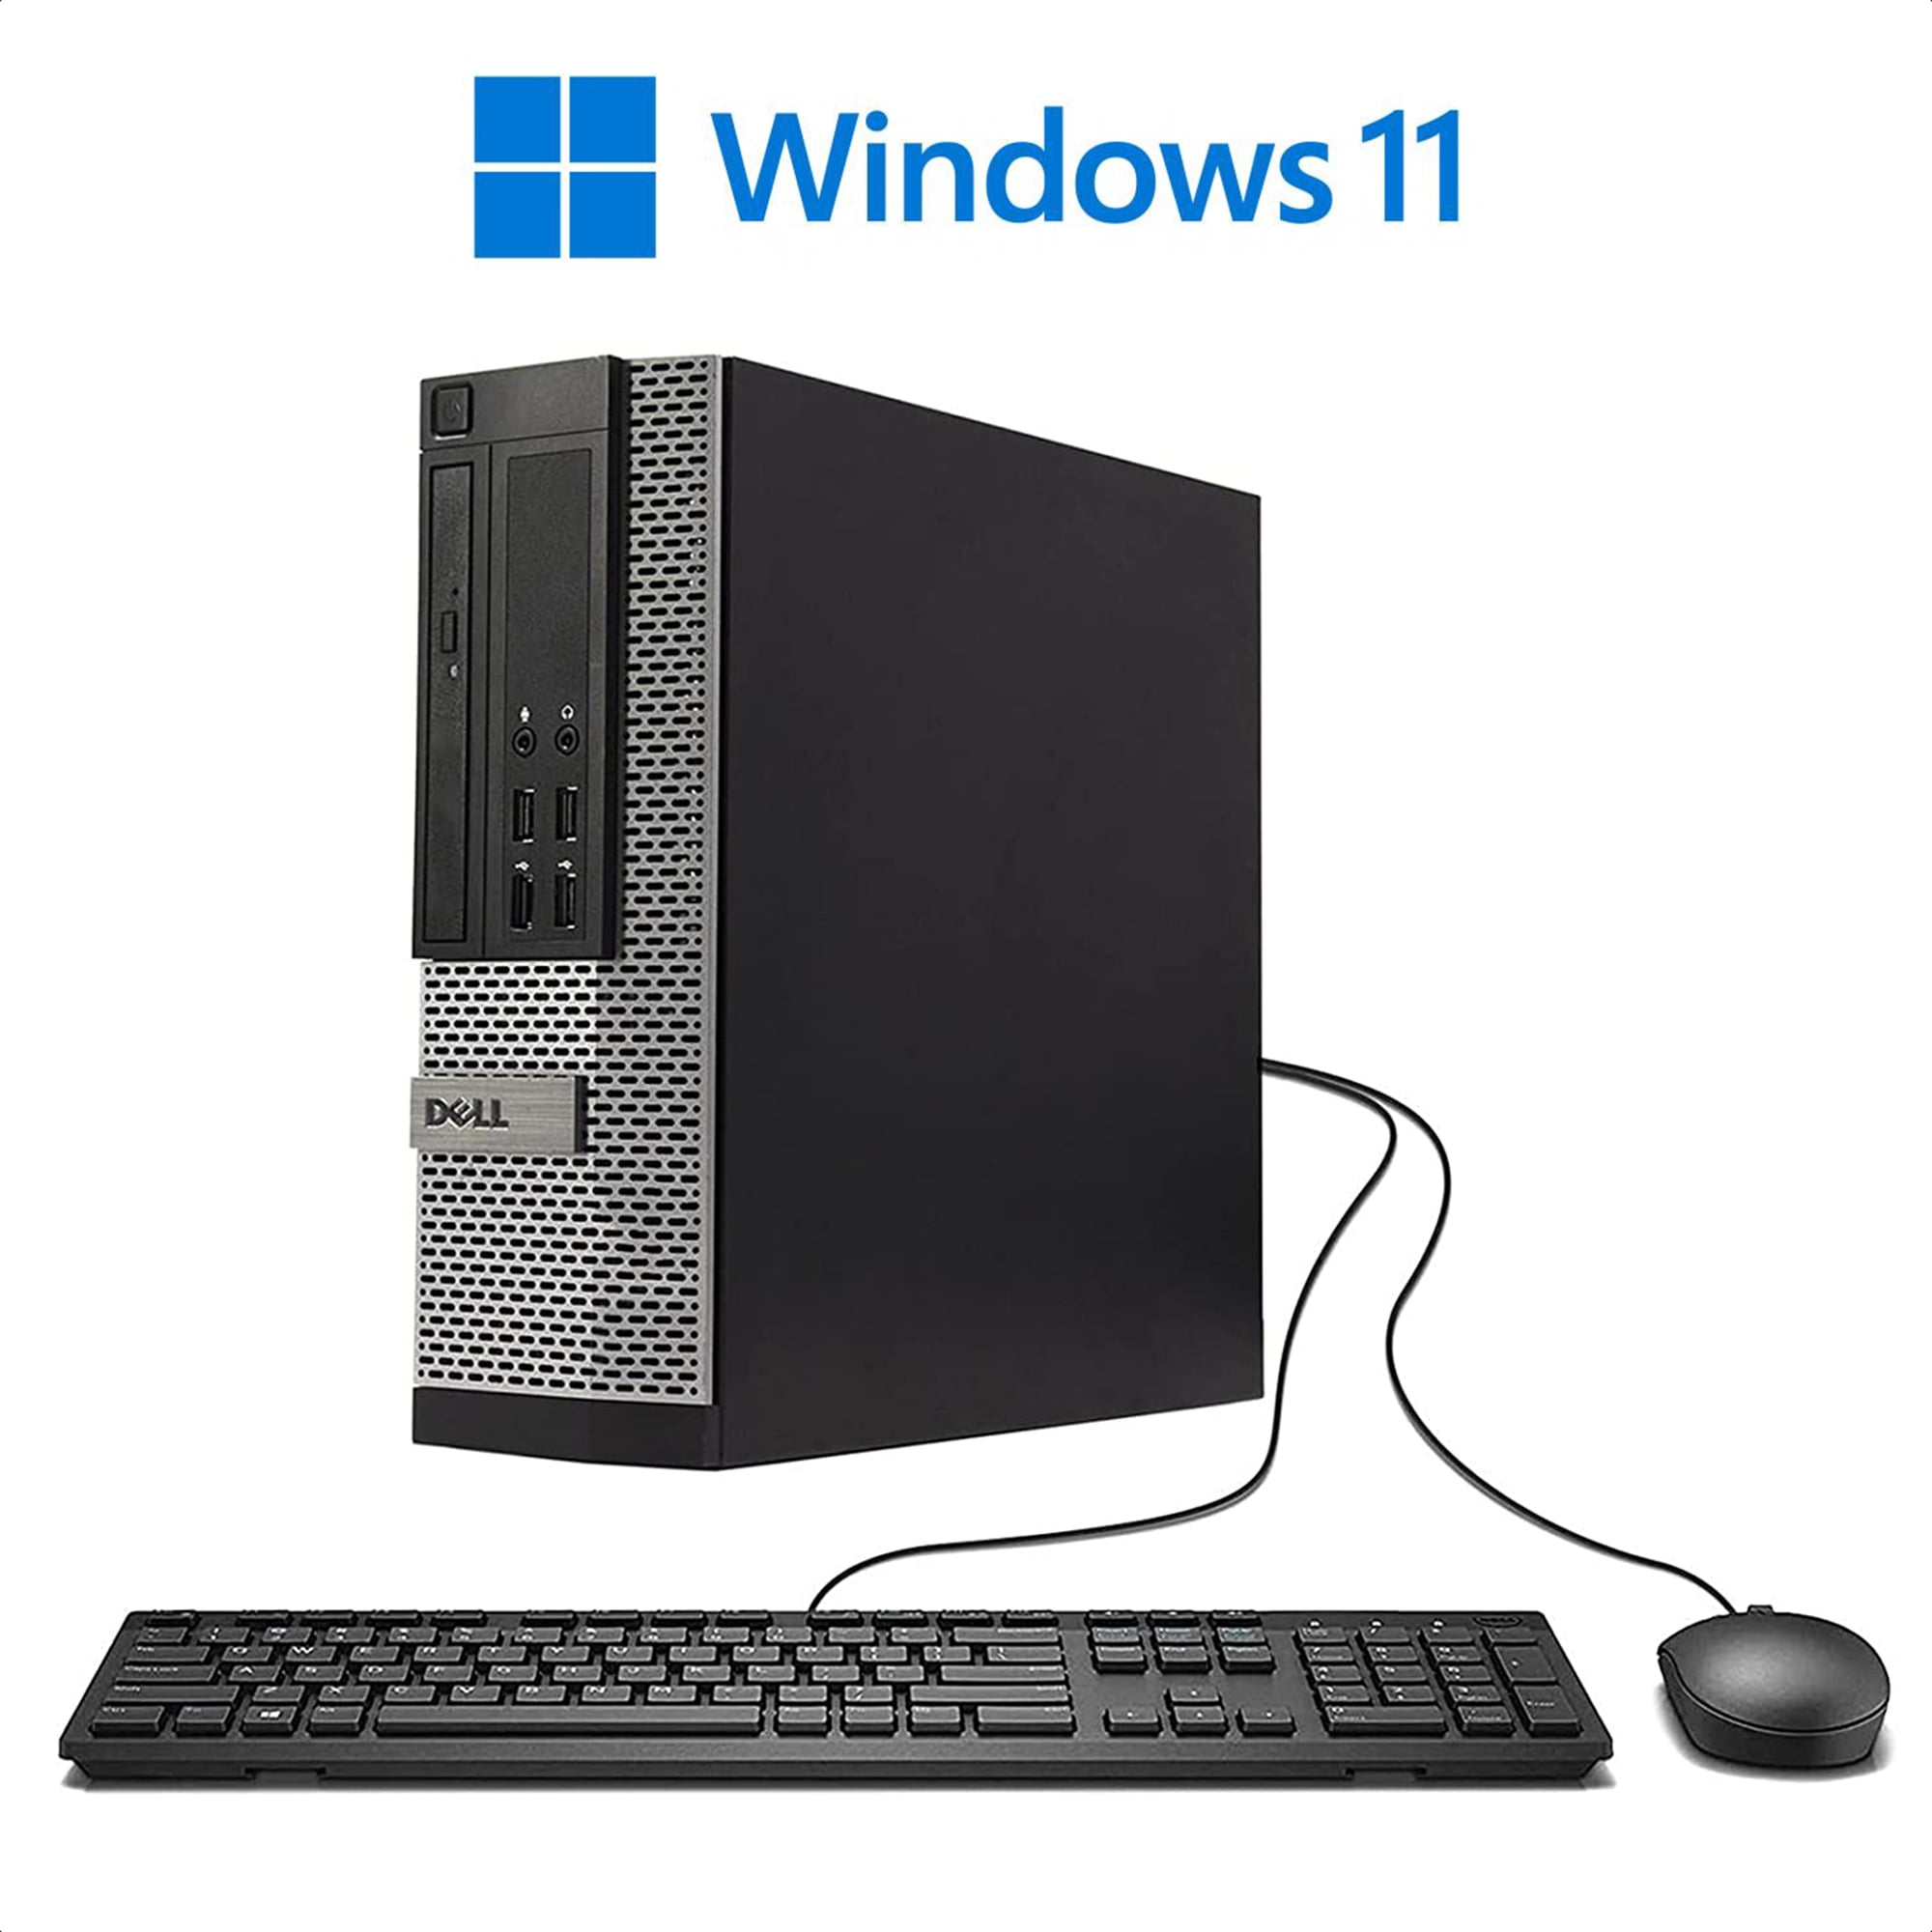 Windows 11 Computers: Desktops, 2-in-1 PCs & More